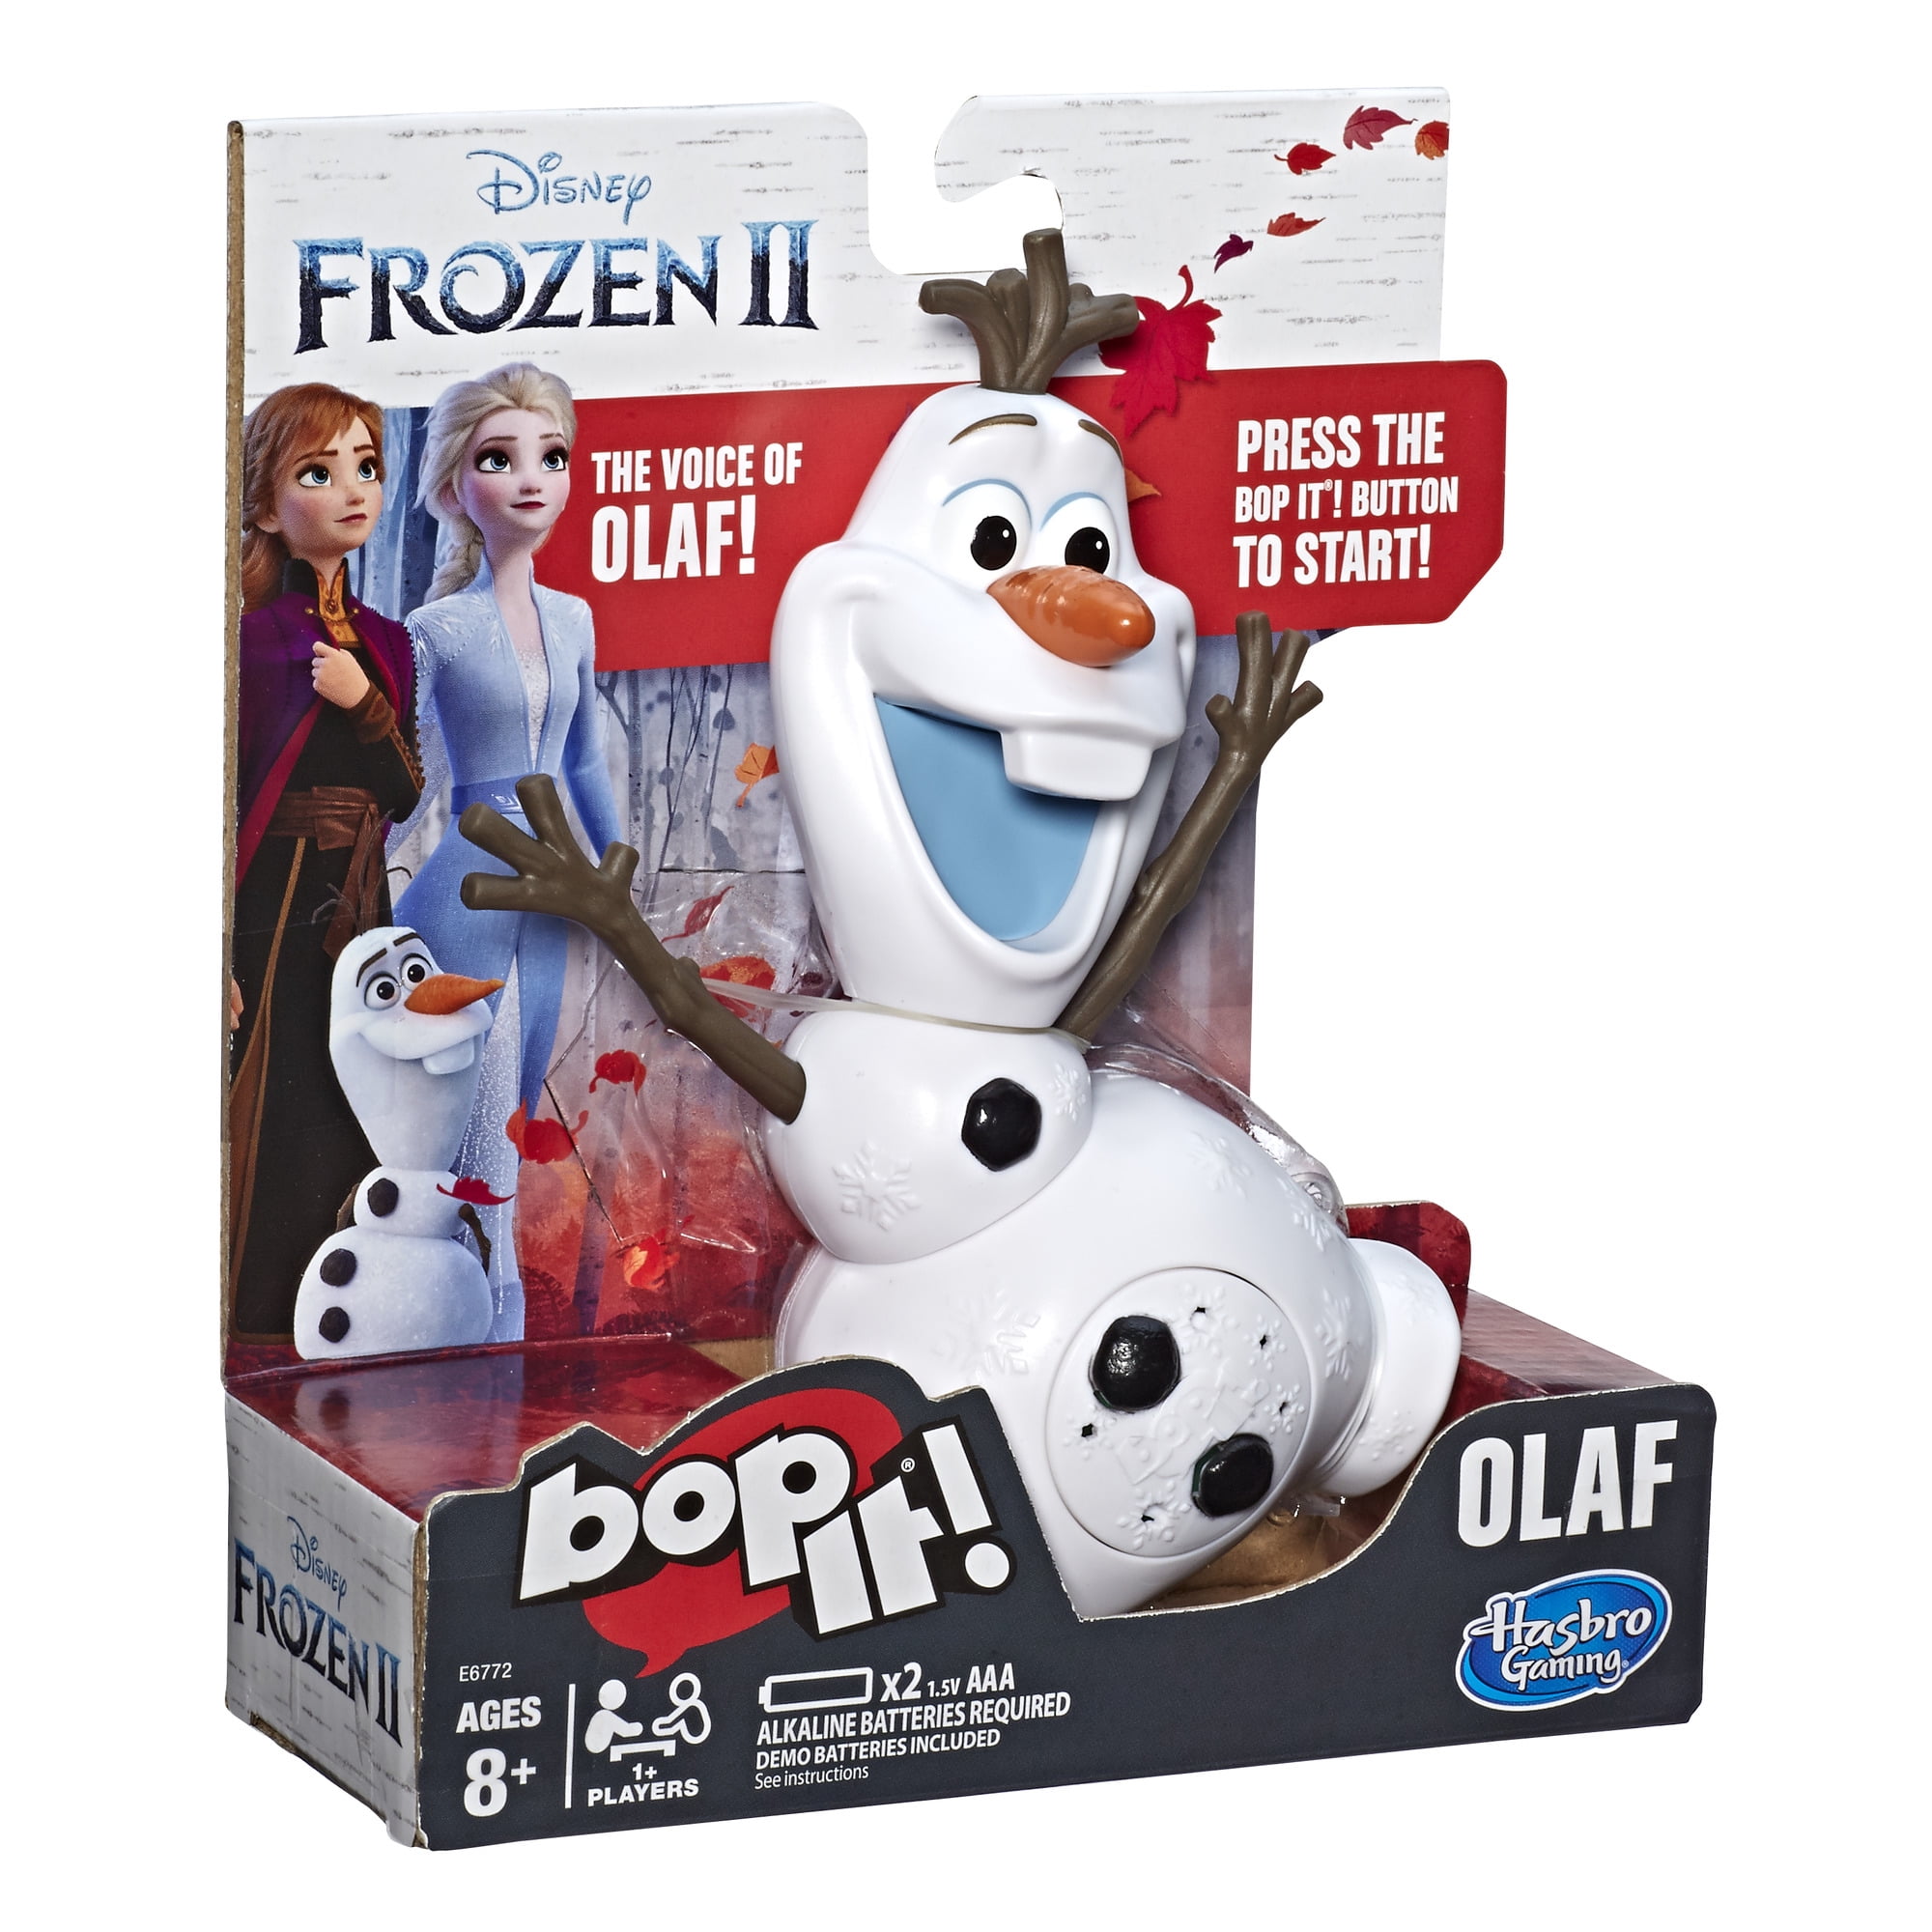 Disney Frozen 2 Board Game E5066 for sale online Hasbro Monopoly 